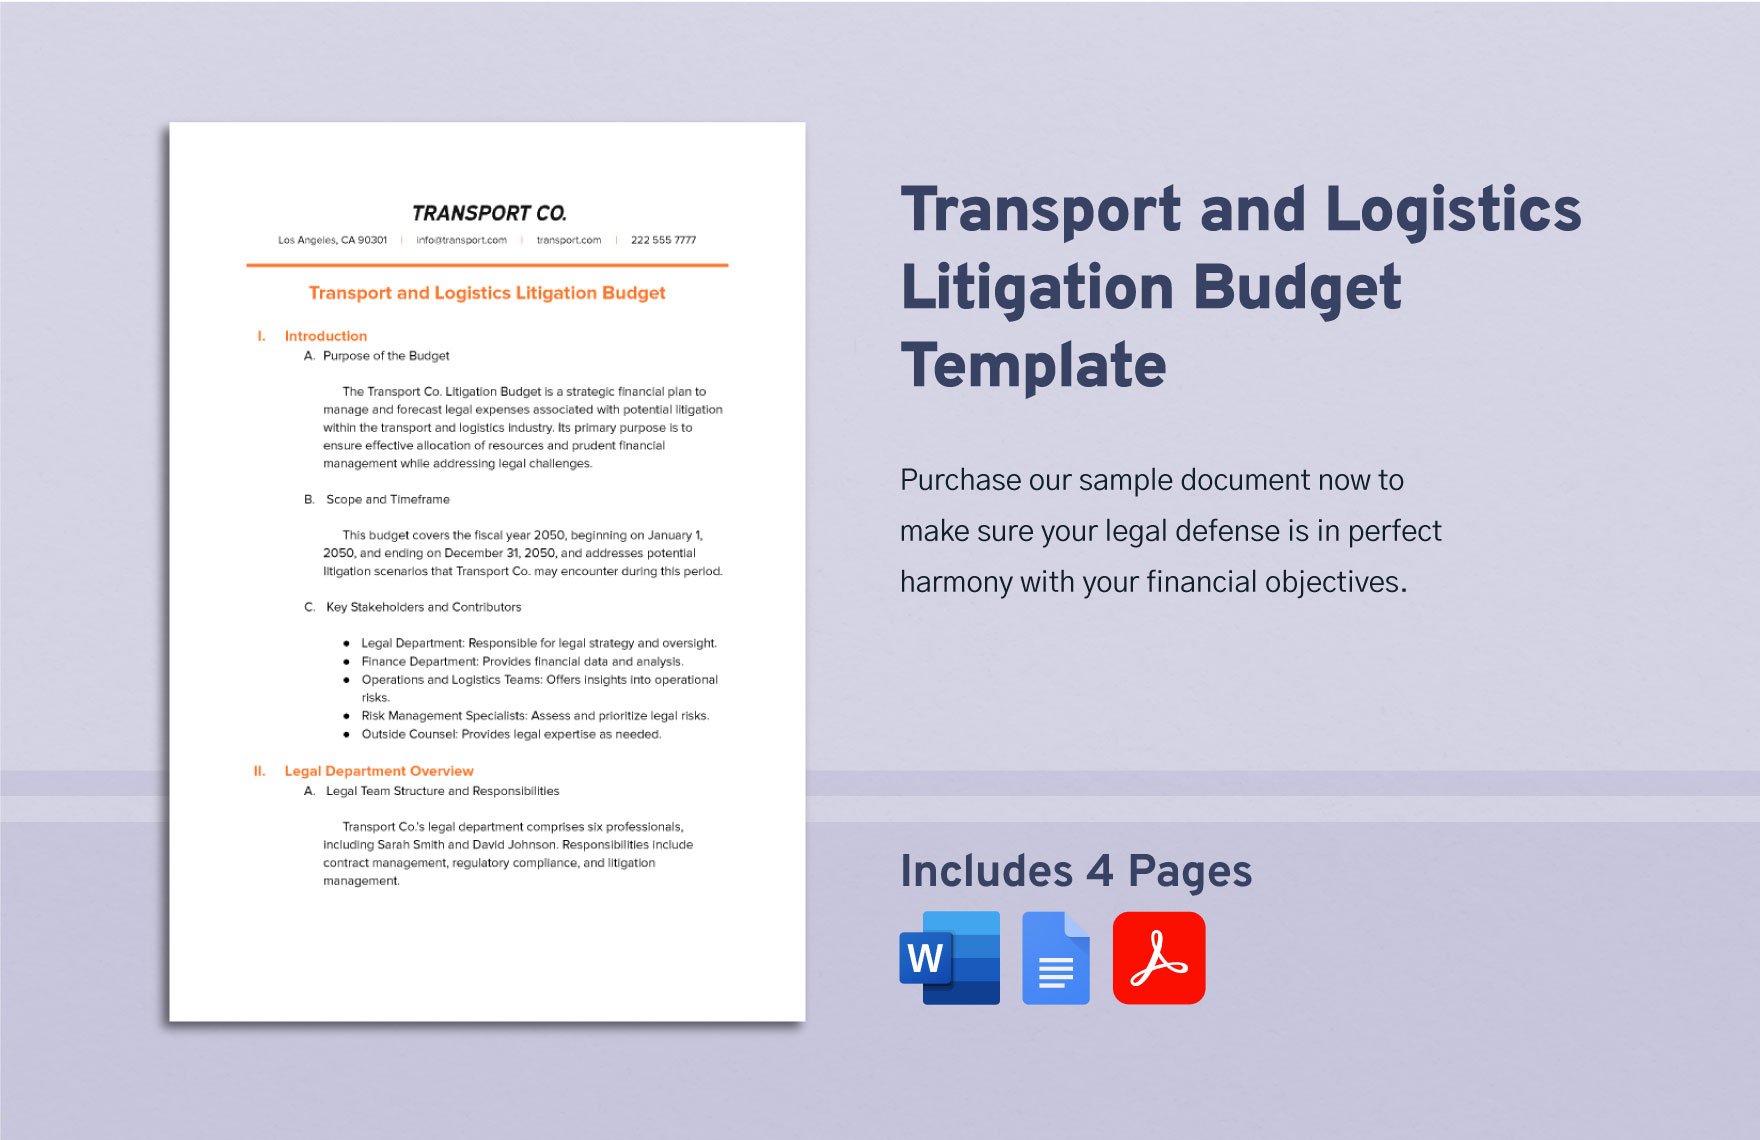 Transport and Logistics Litigation Budget Template